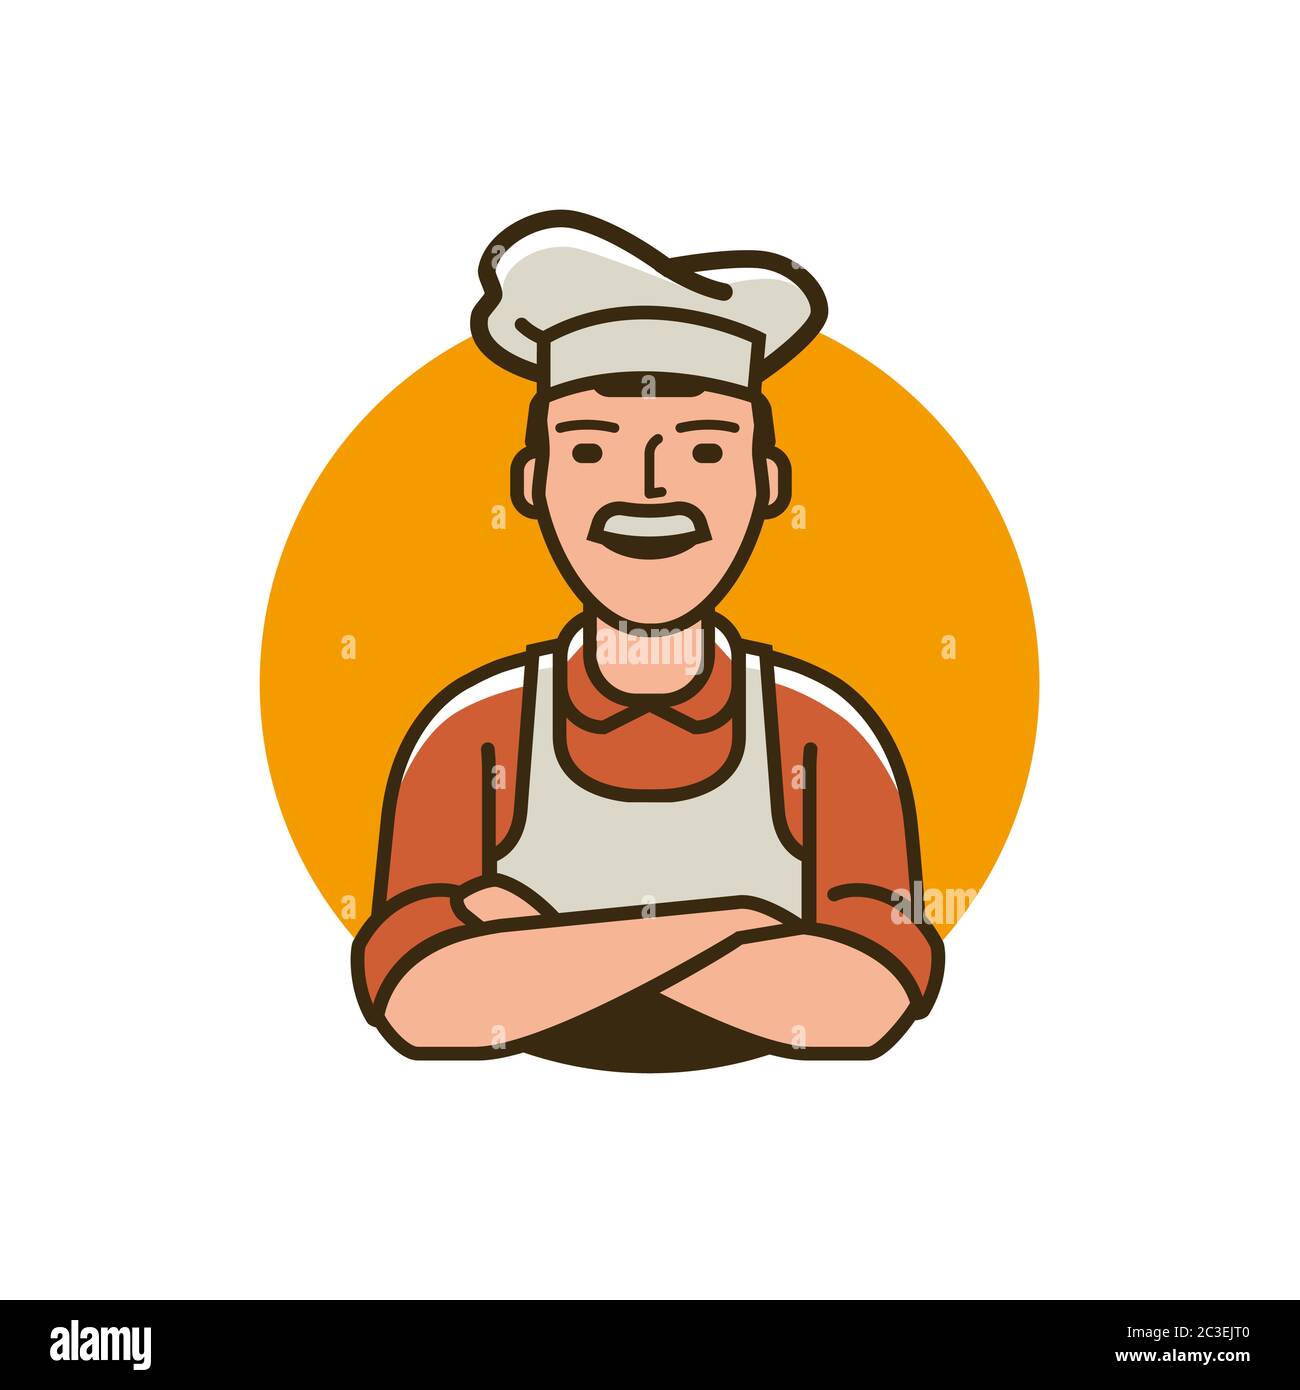 Chef in hat logo. Restaurant, cafe vector illustration Stock Vector